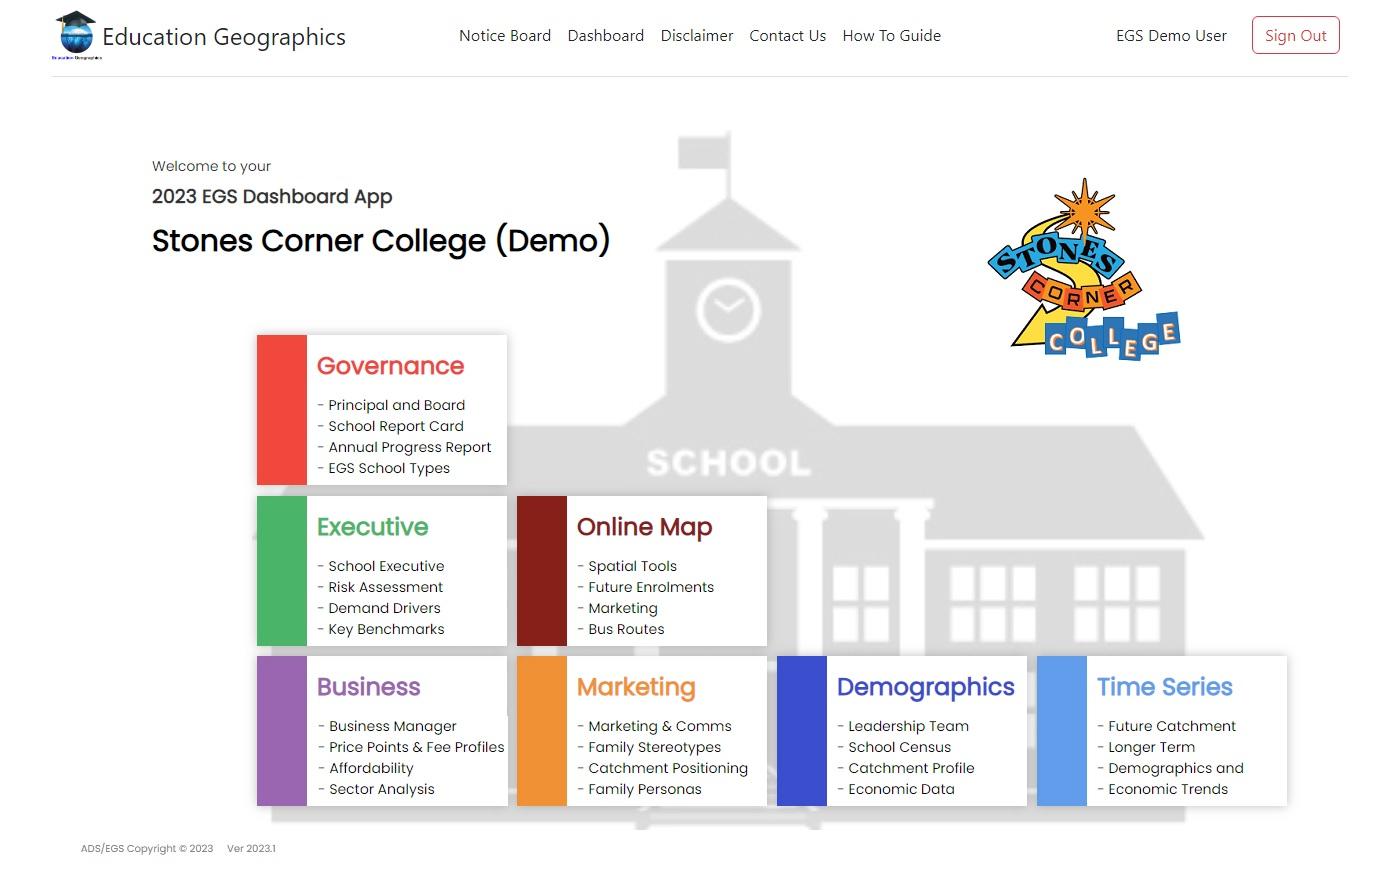 2023 EGS Dashboard App - Stones Corner College (Demo)